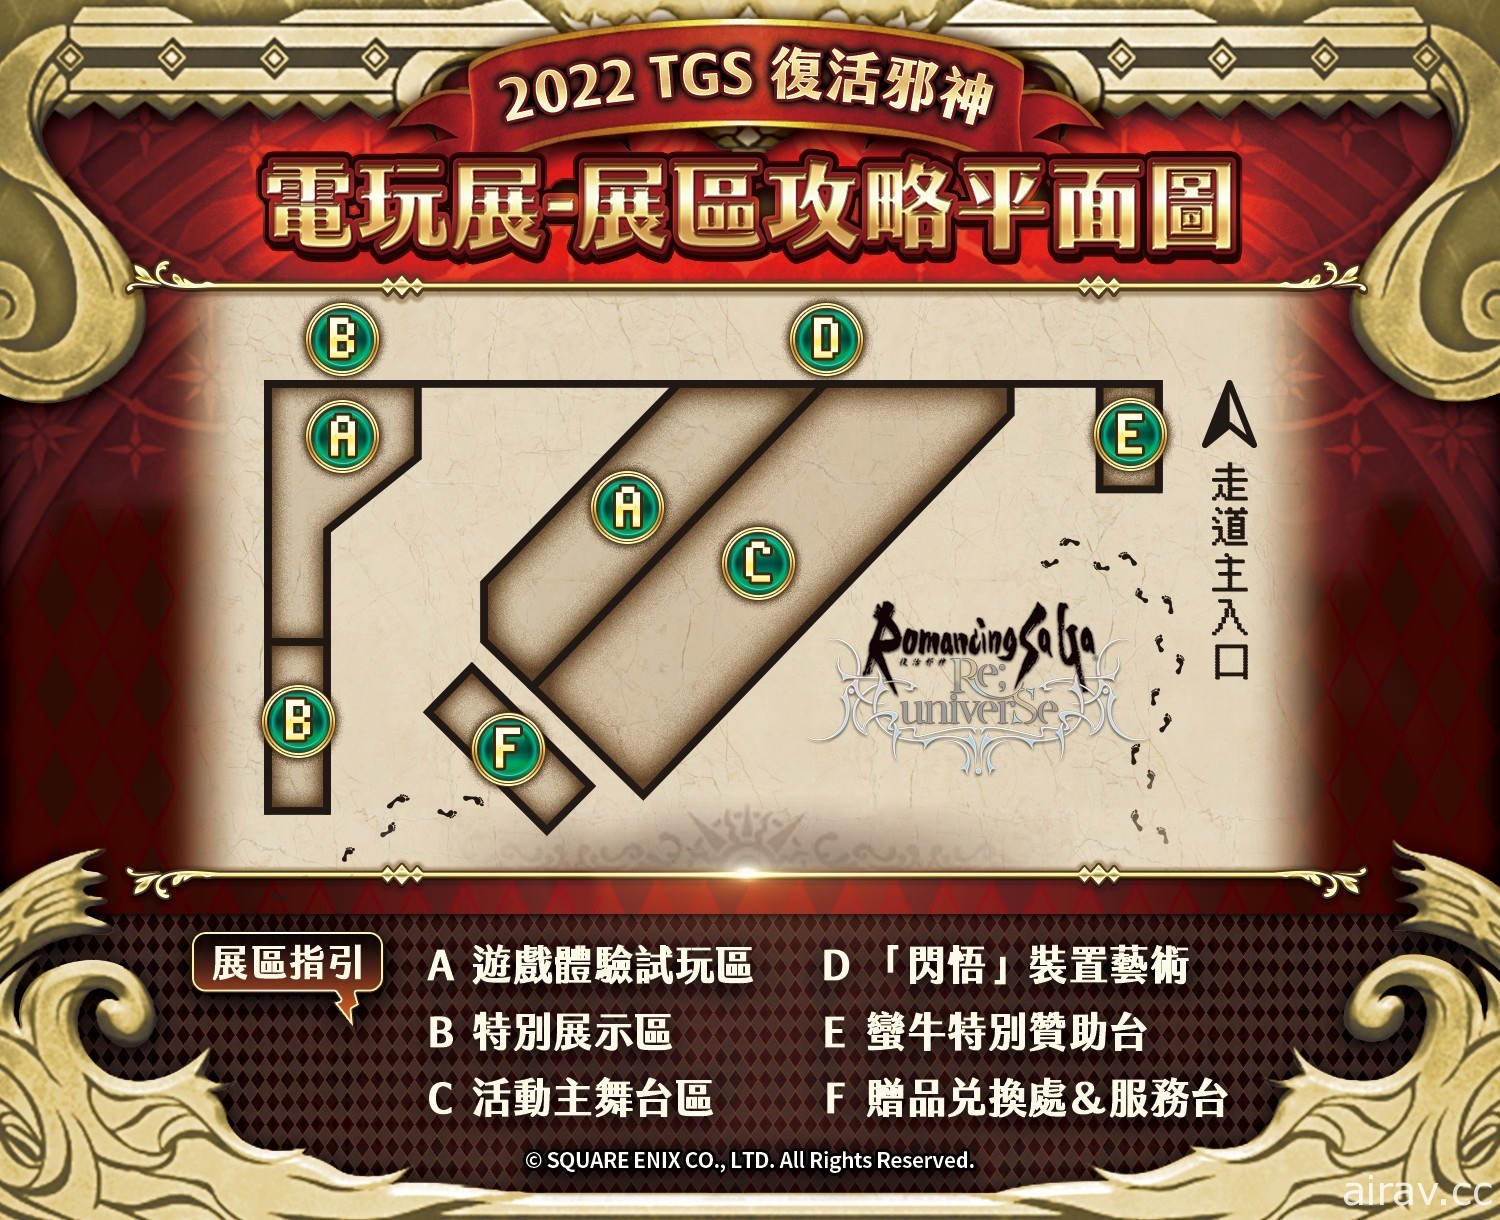 【TpGS 22】《復活邪神》系列首次參展「台北國際電玩展」 釋出攤位資訊